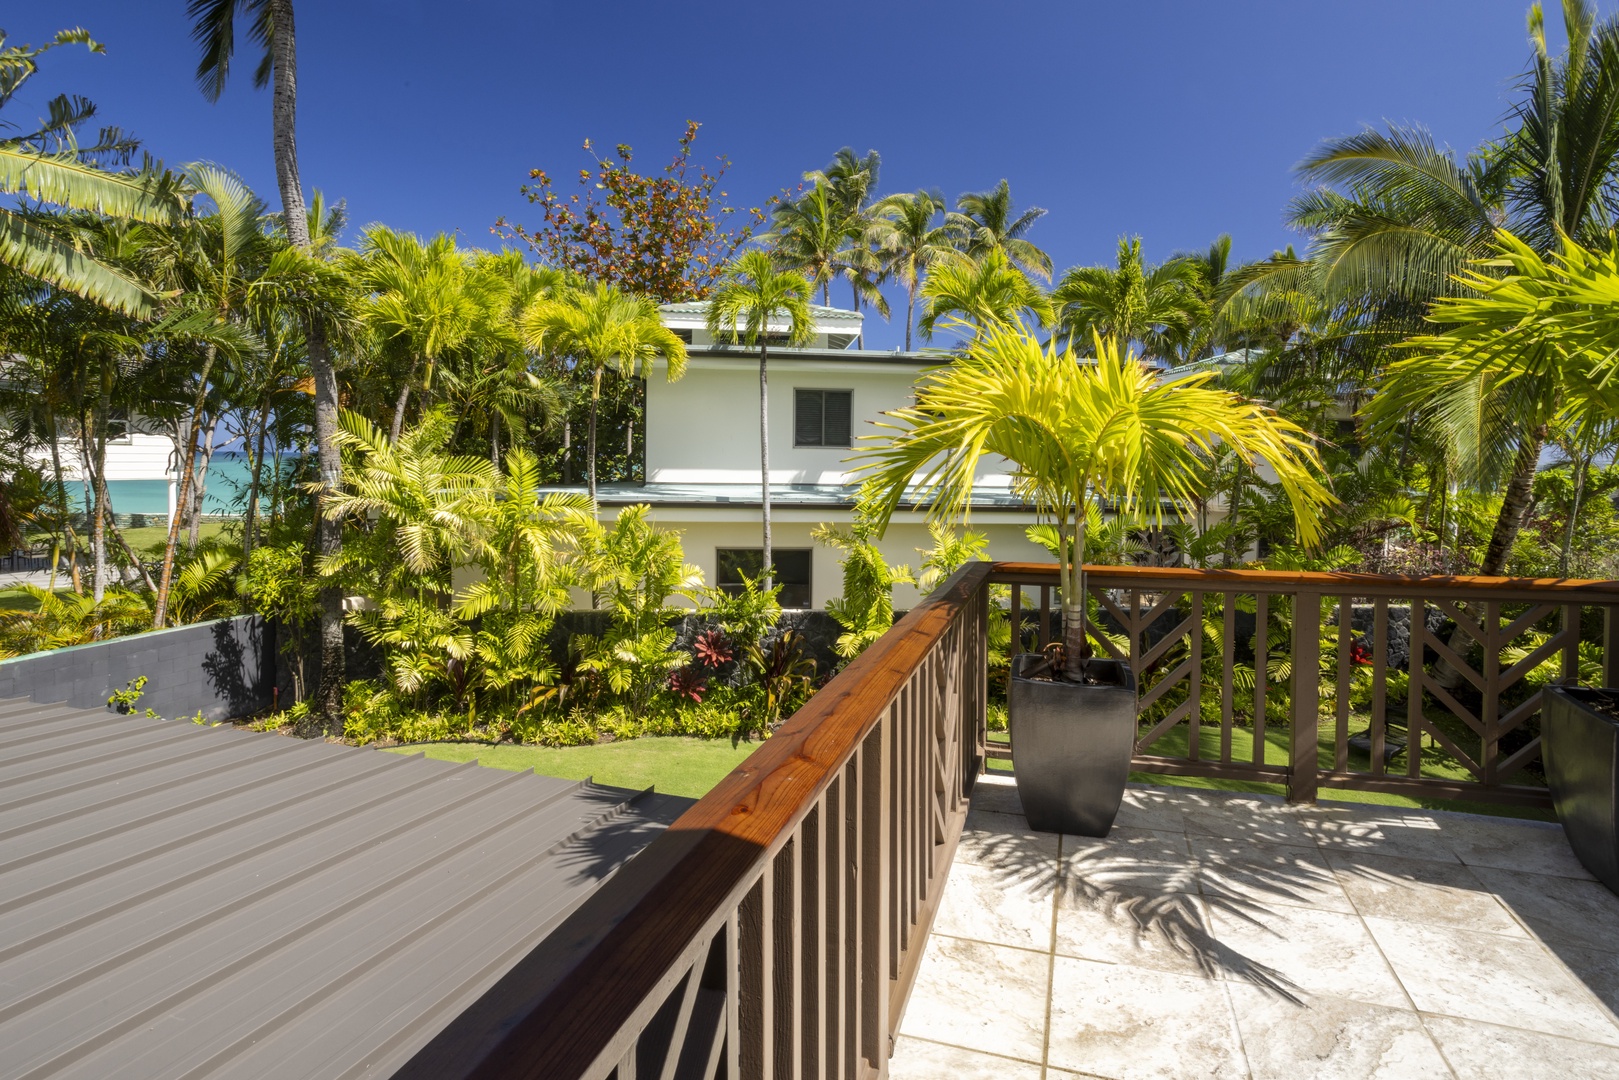 Kailua Vacation Rentals, Mokulua Seaside - Views from the lanai area, a perfect morning coffee spot.